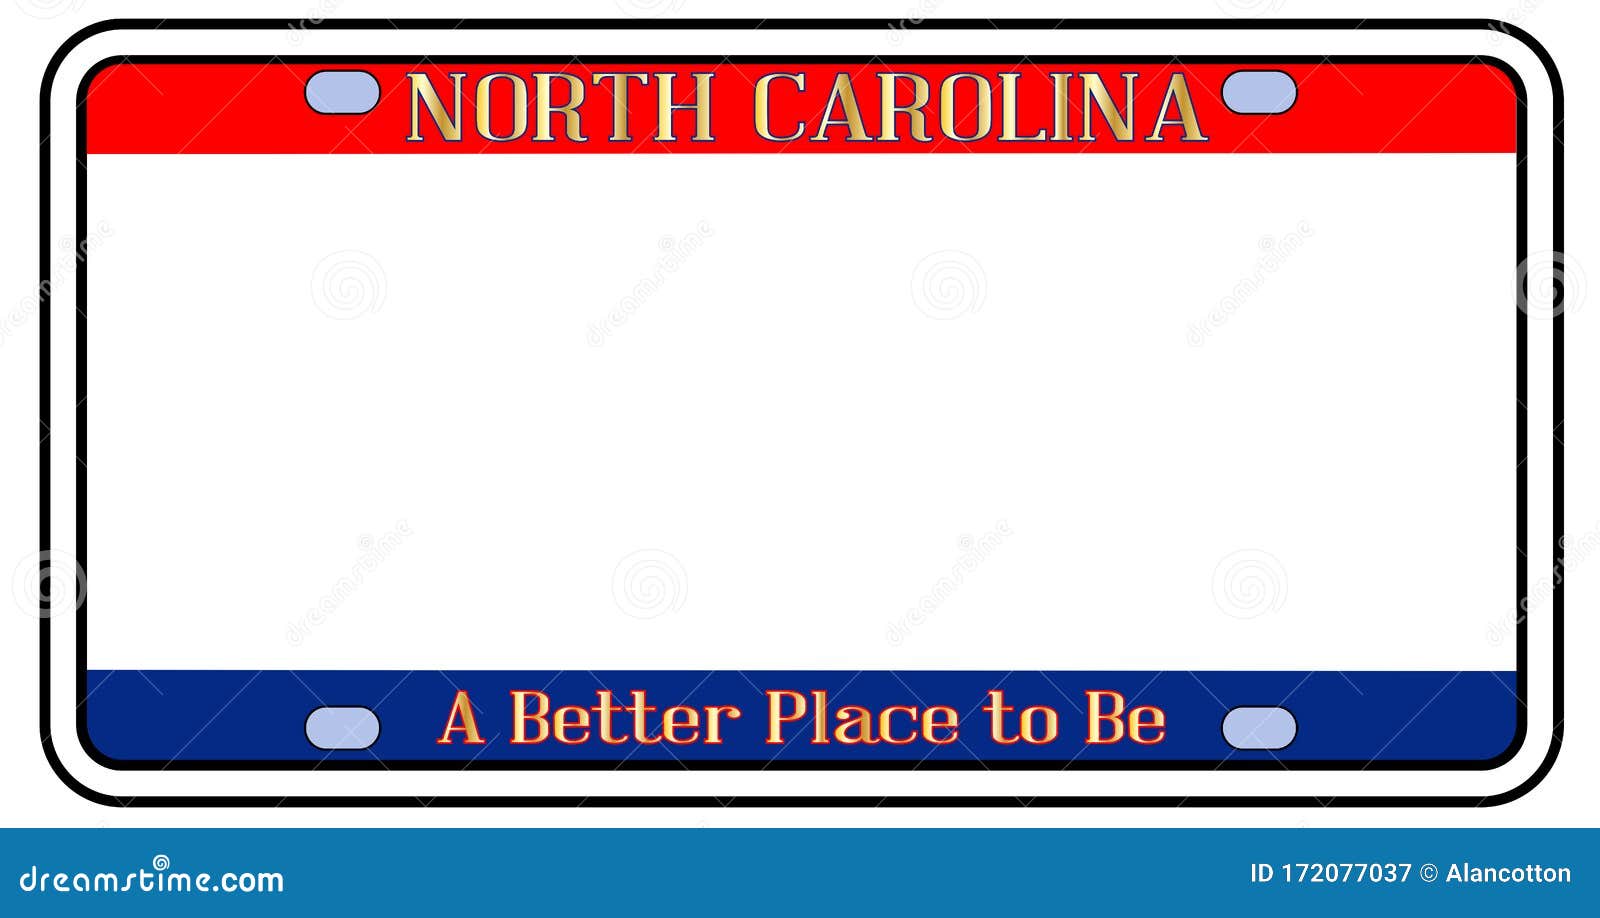 Blank North Carolina License Plate Stock Vector Illustration Of Vehicle Graphic 172077037